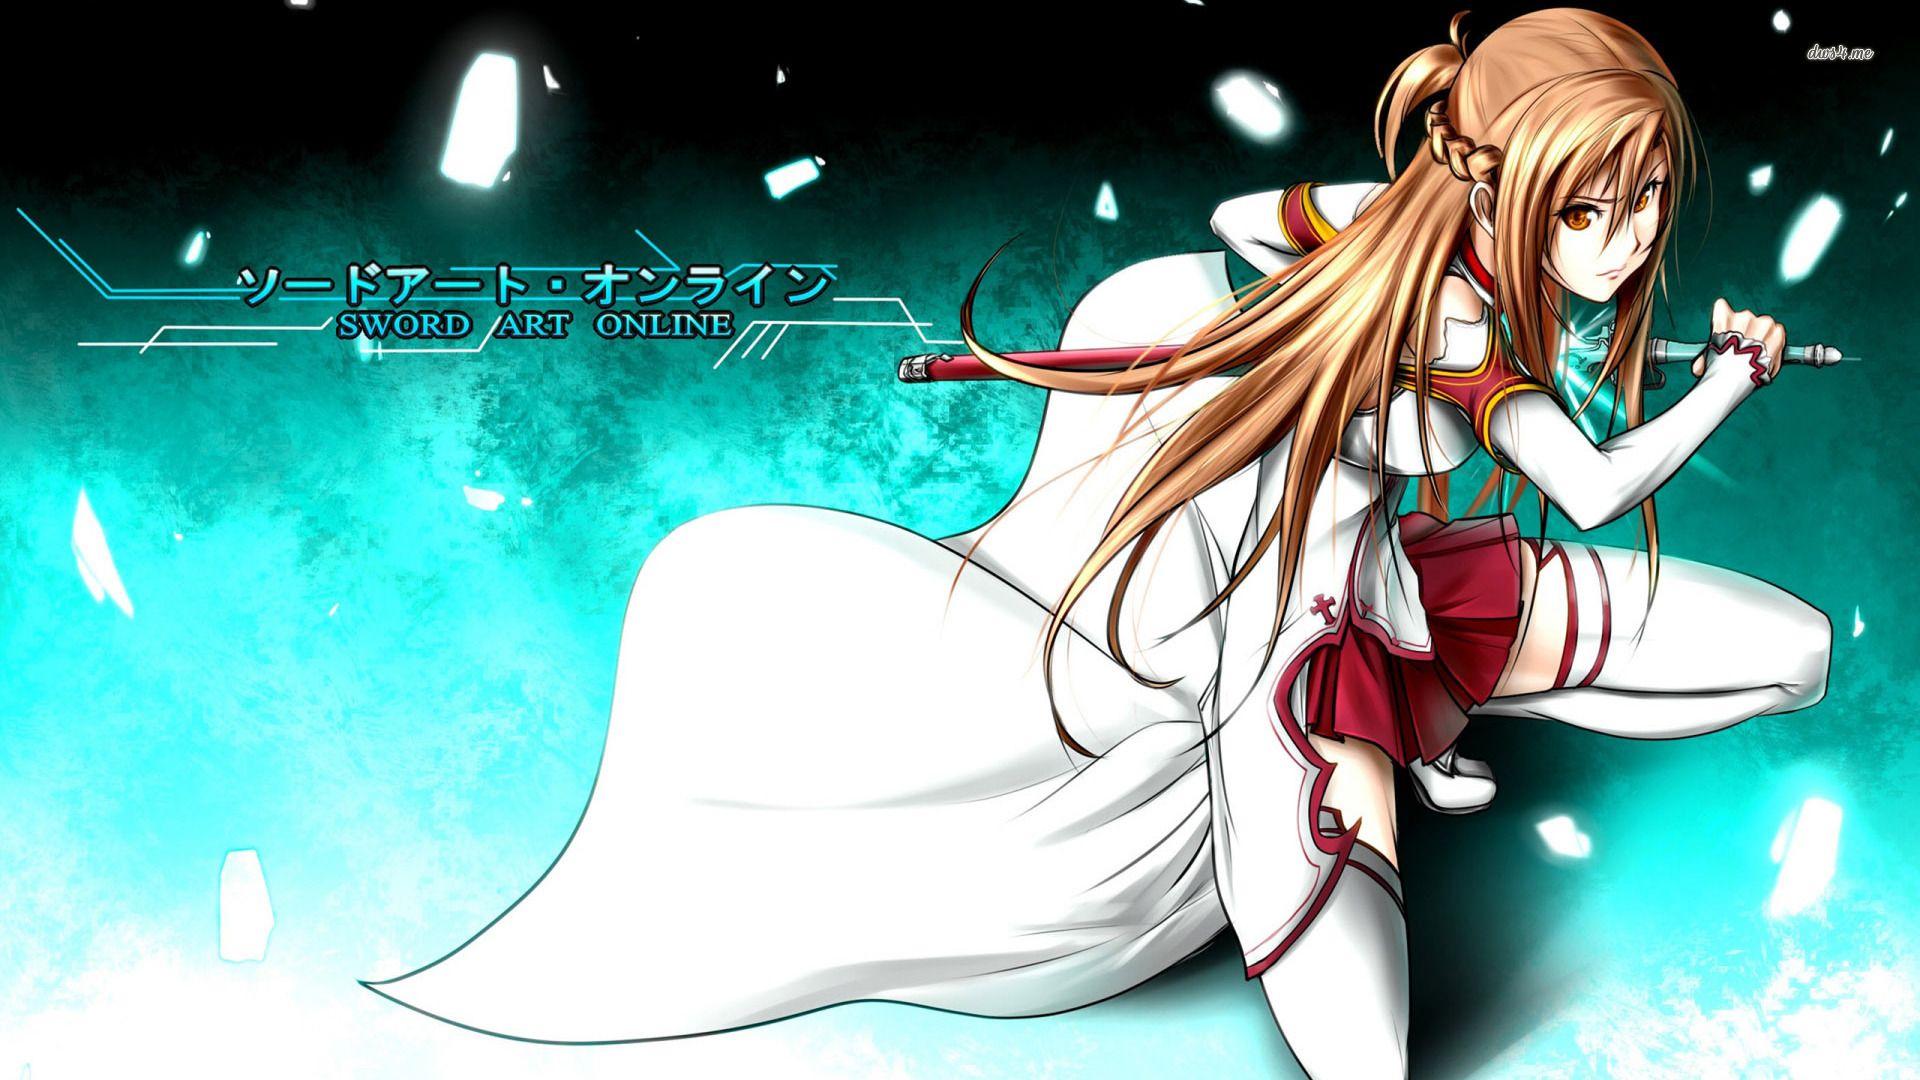 1920x1080 Asuna - Hình nền Sword Art Online - Hình nền anime